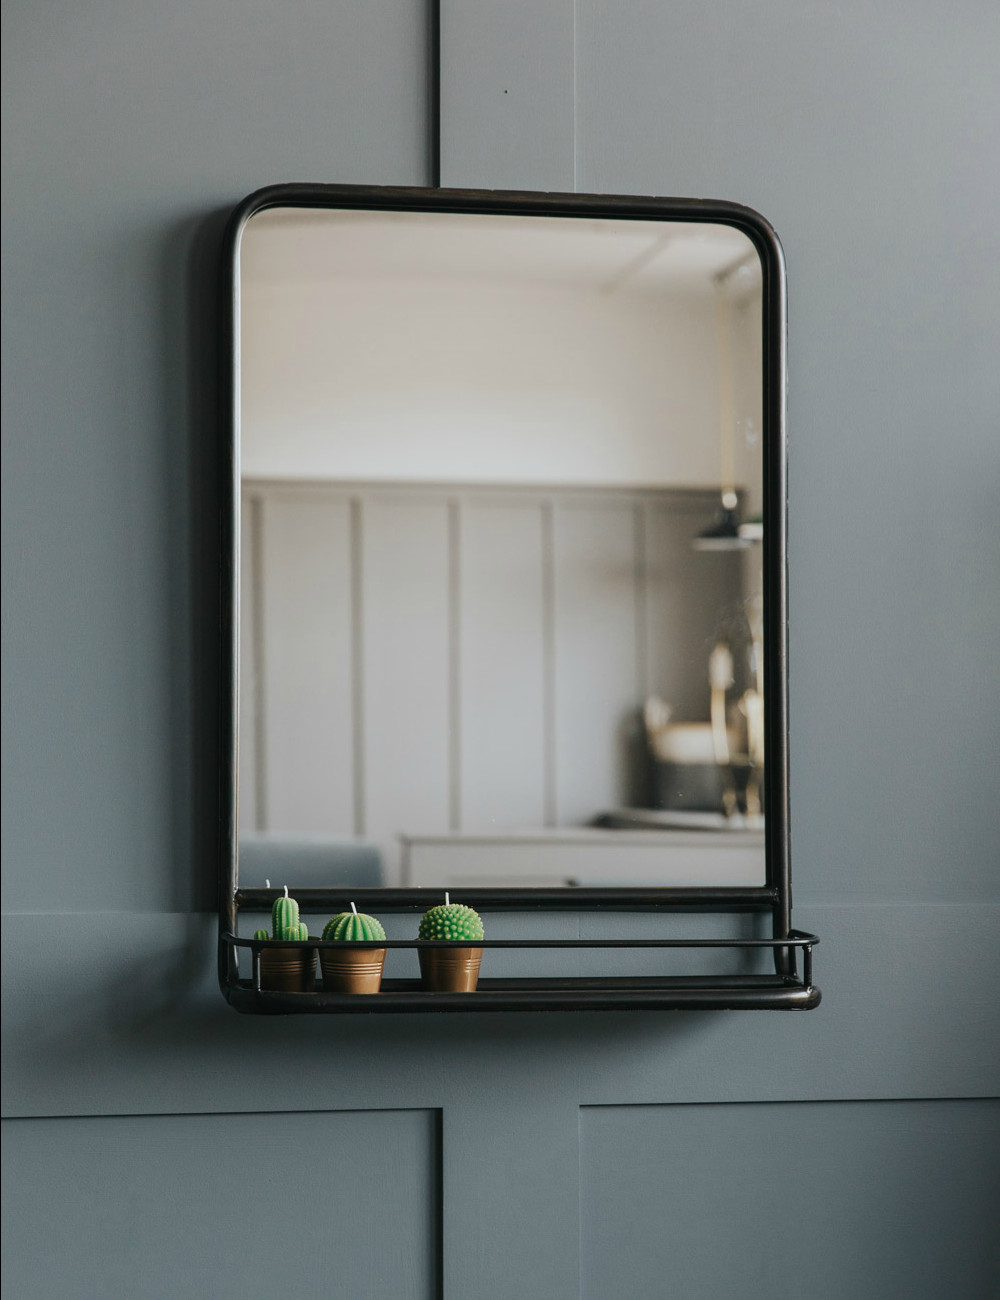 Industrial Bathroom Mirror
 Pin by Gemma Woolhead on Ambers ideas in 2020